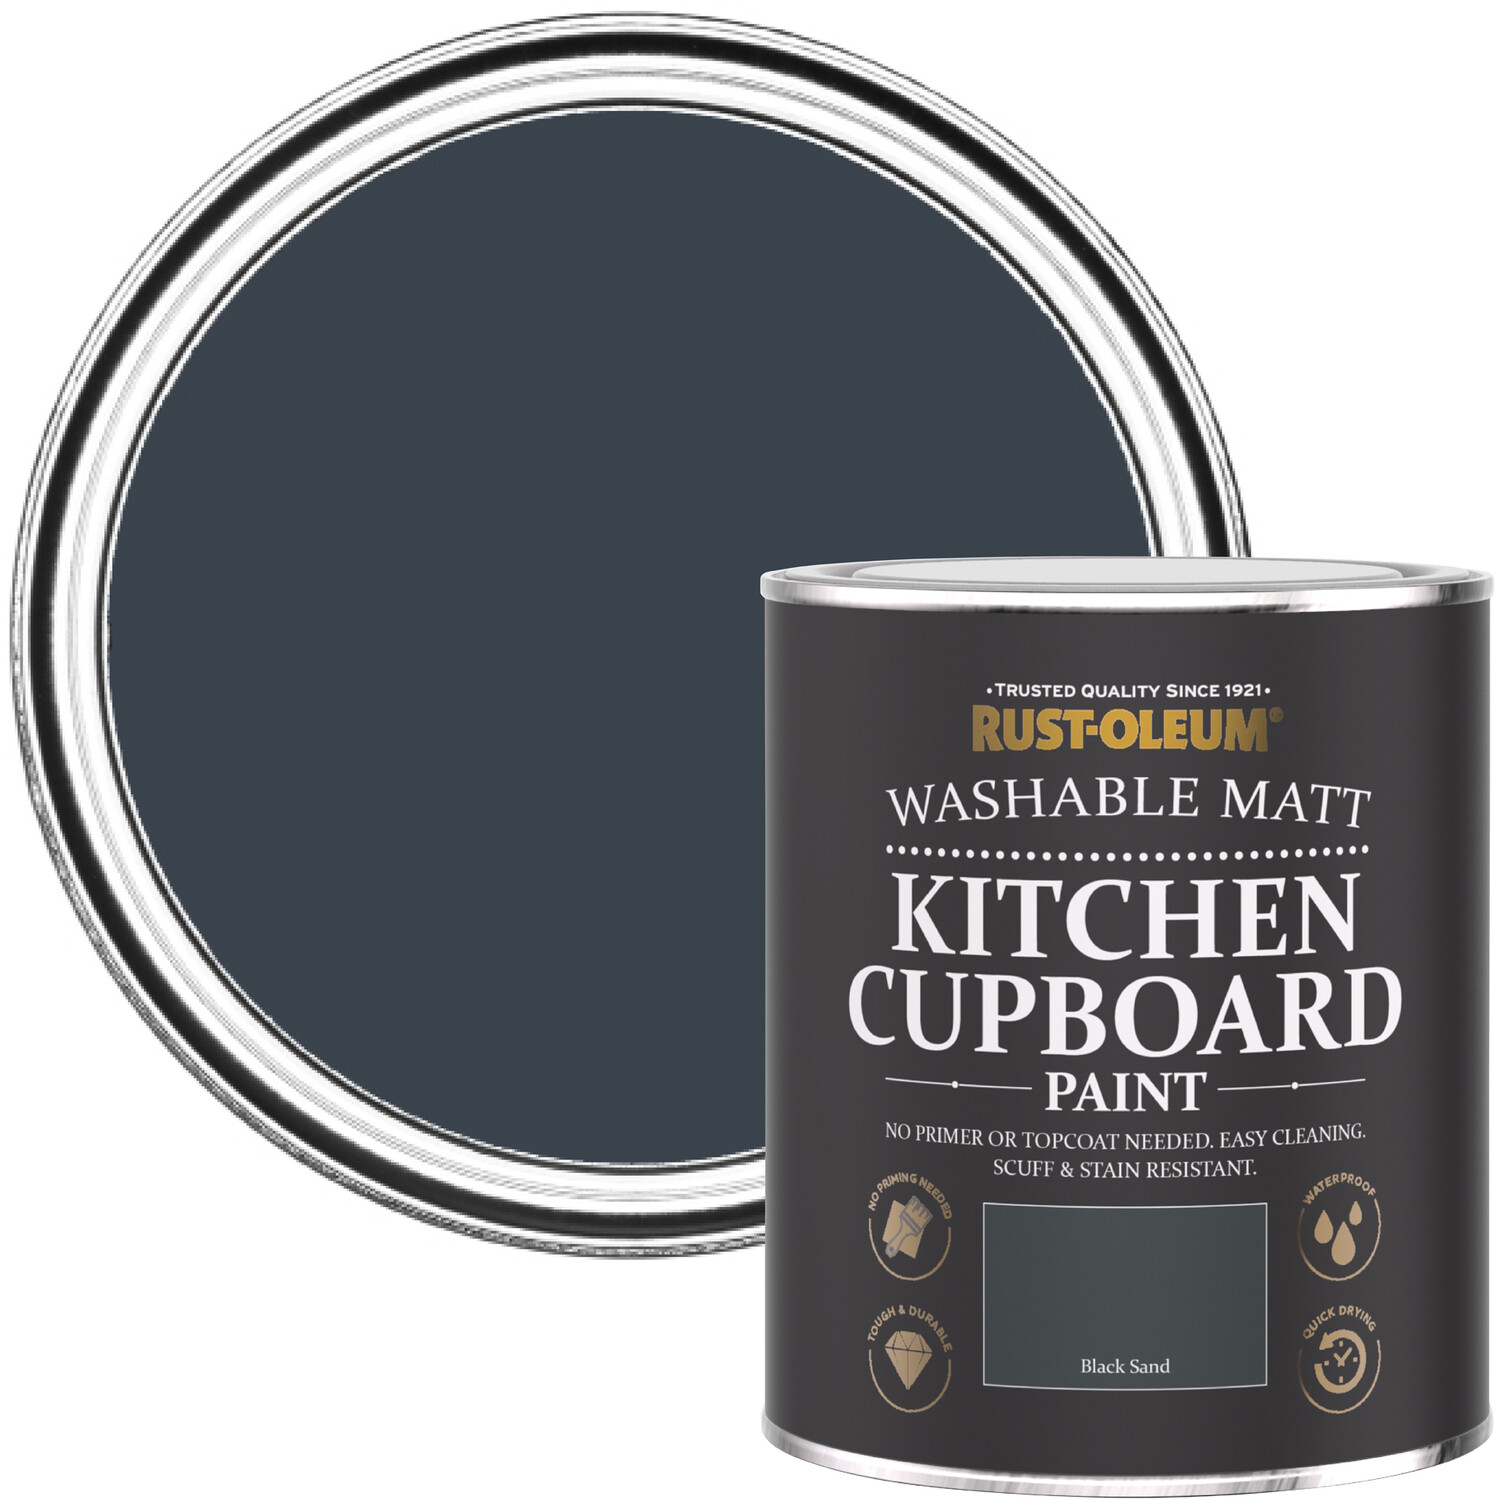 Rust-Oleum Black Sand Kitchen Cupboard Paint 750ml Image 1